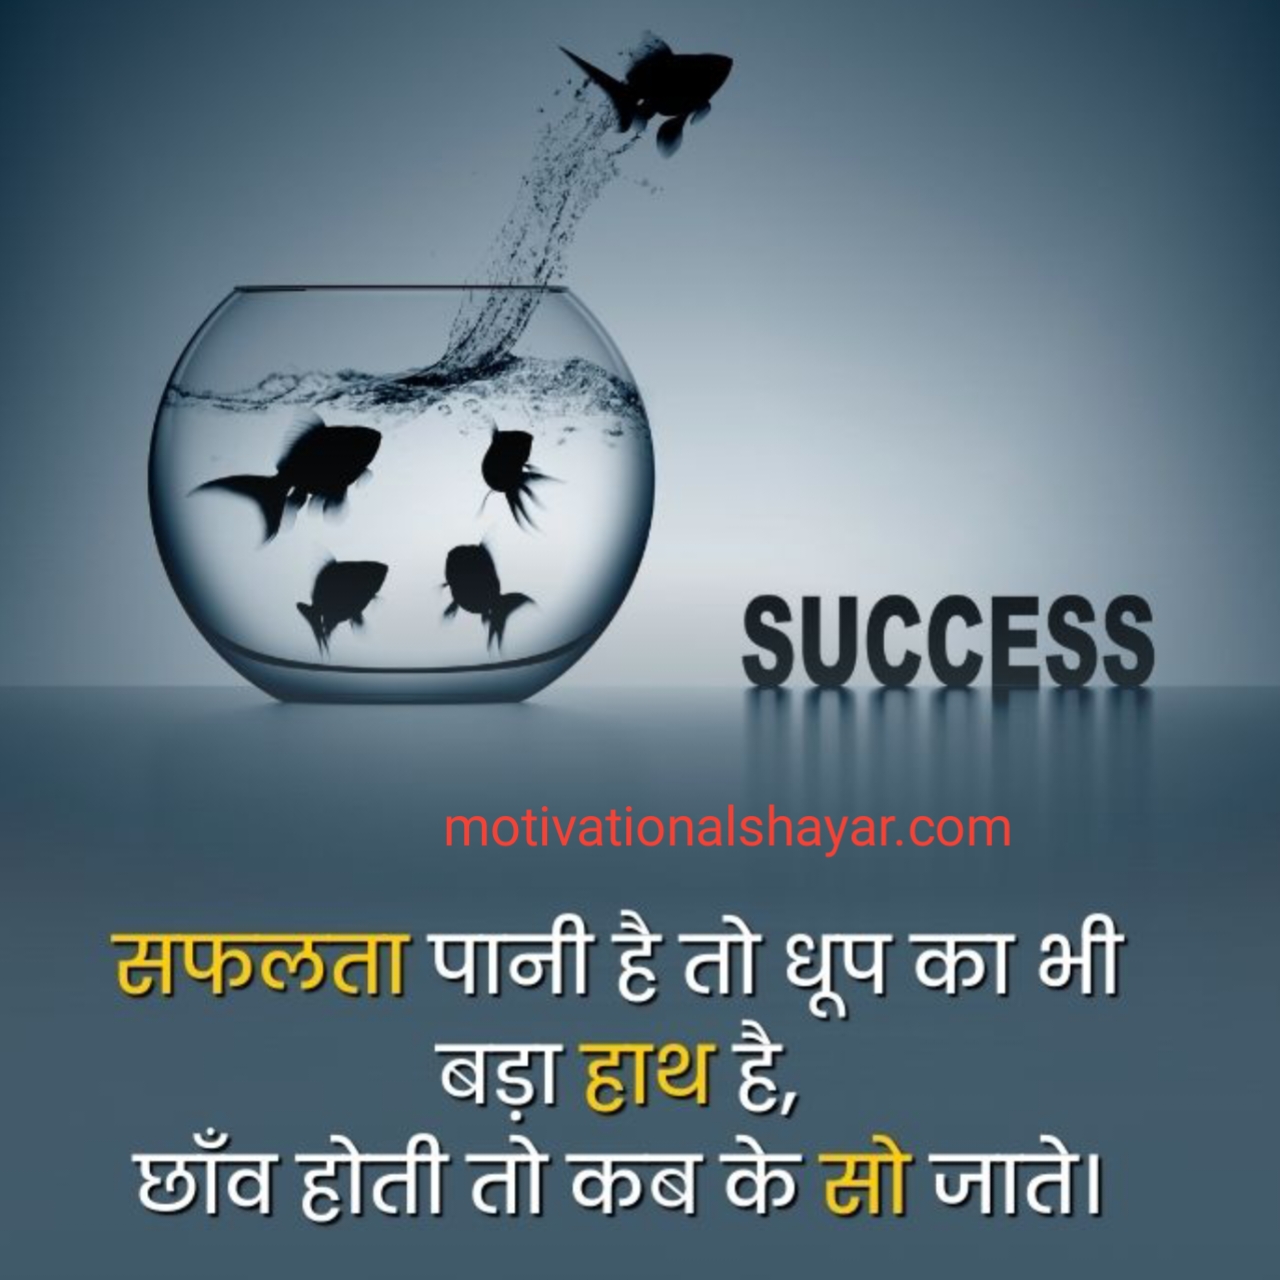 Best Motivational Quotes in Hindi मोटिवेशनल कोट्स हिंदी